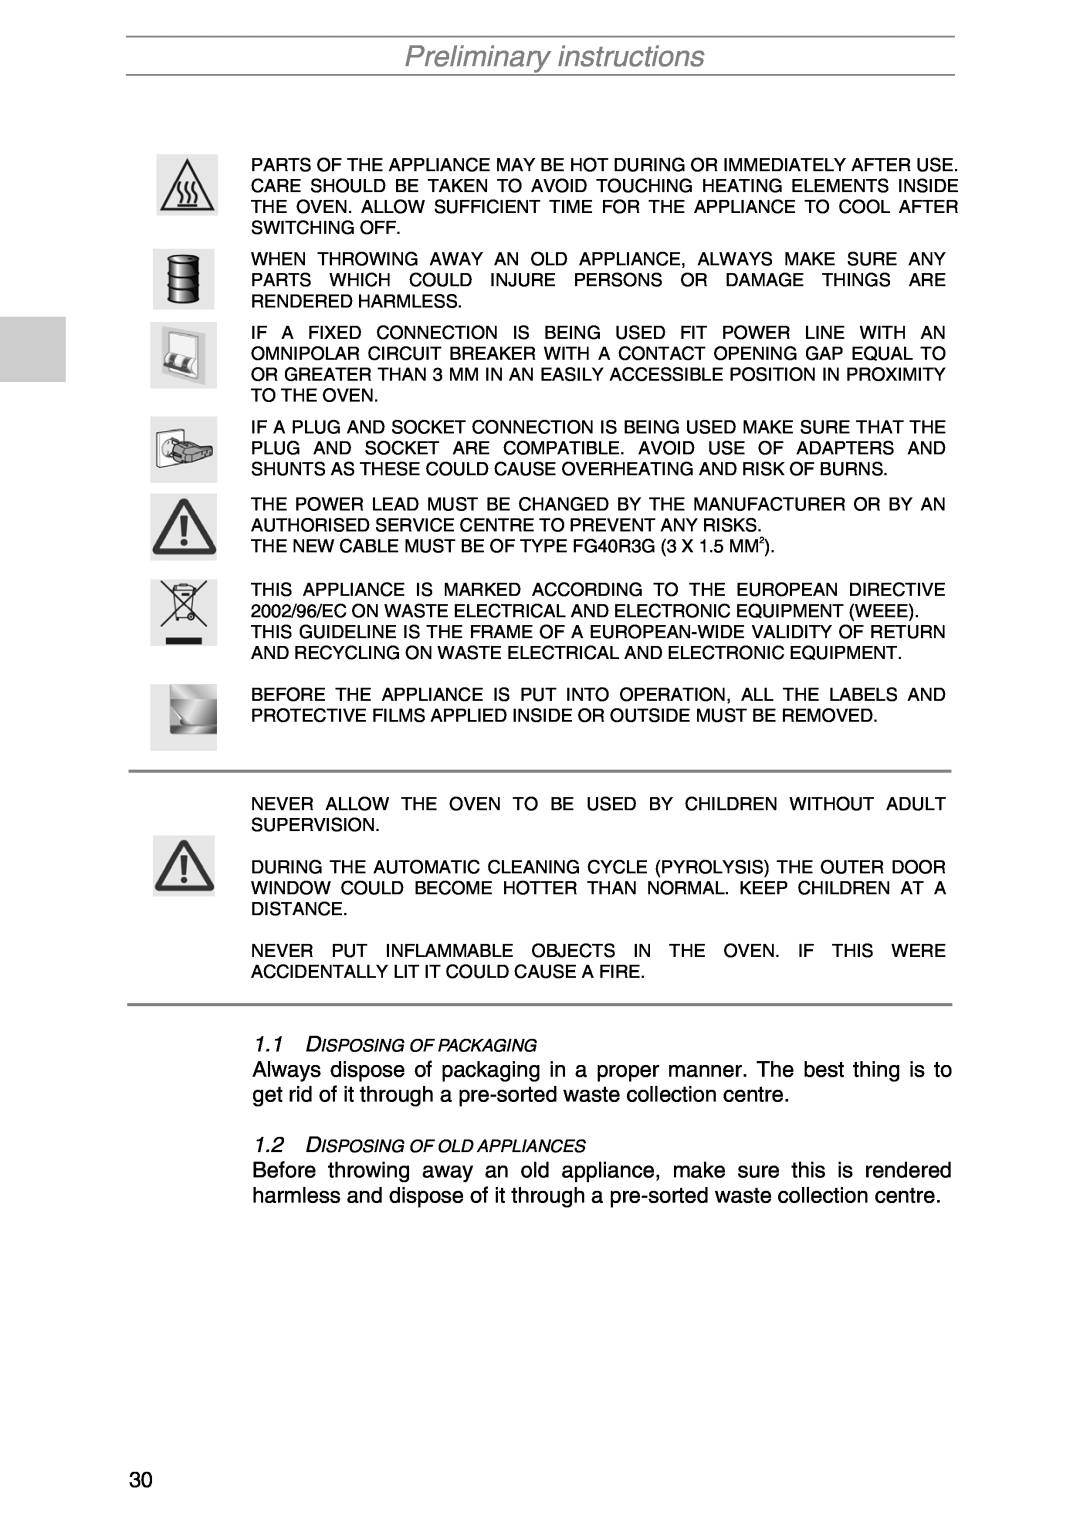 Smeg PIRO10NE manual Preliminary instructions, Disposing Of Packaging, Disposing Of Old Appliances 